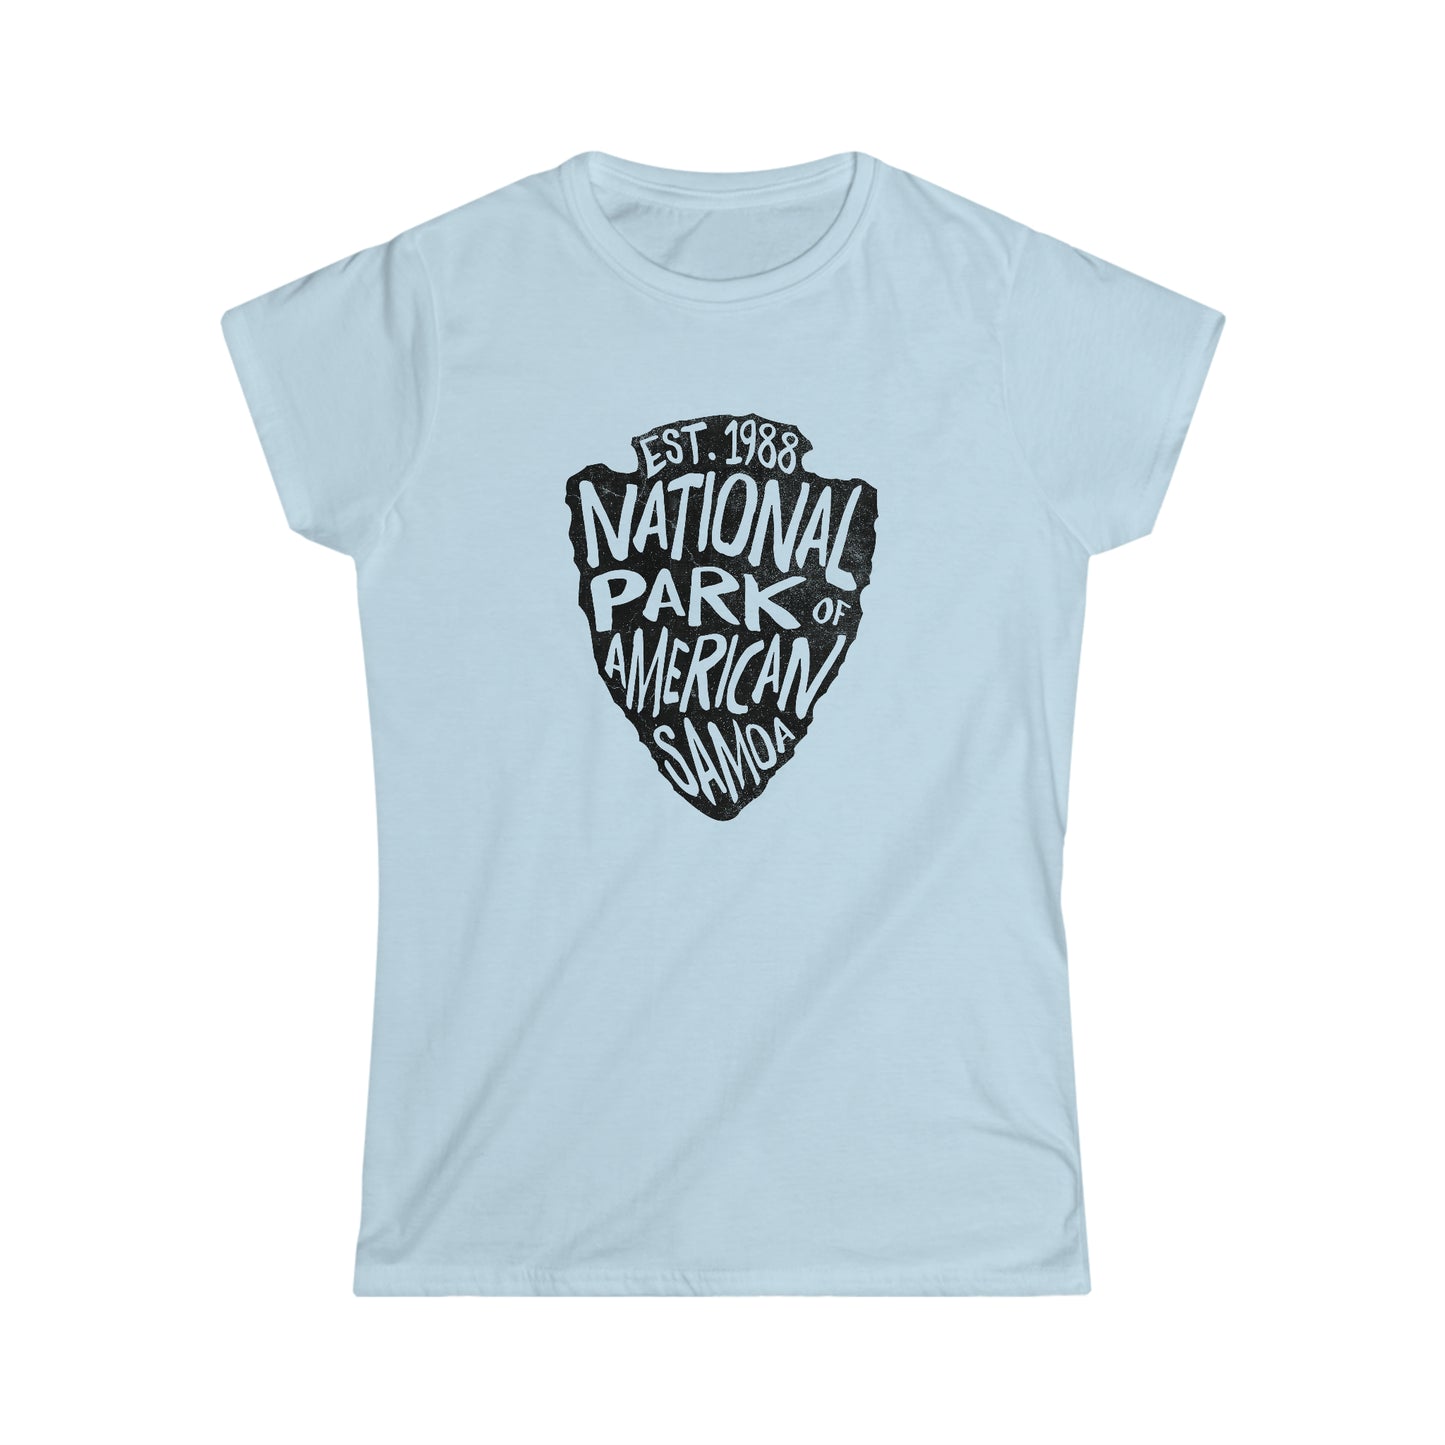 National Park of American Samoa Women's T-Shirt - Arrowhead Design